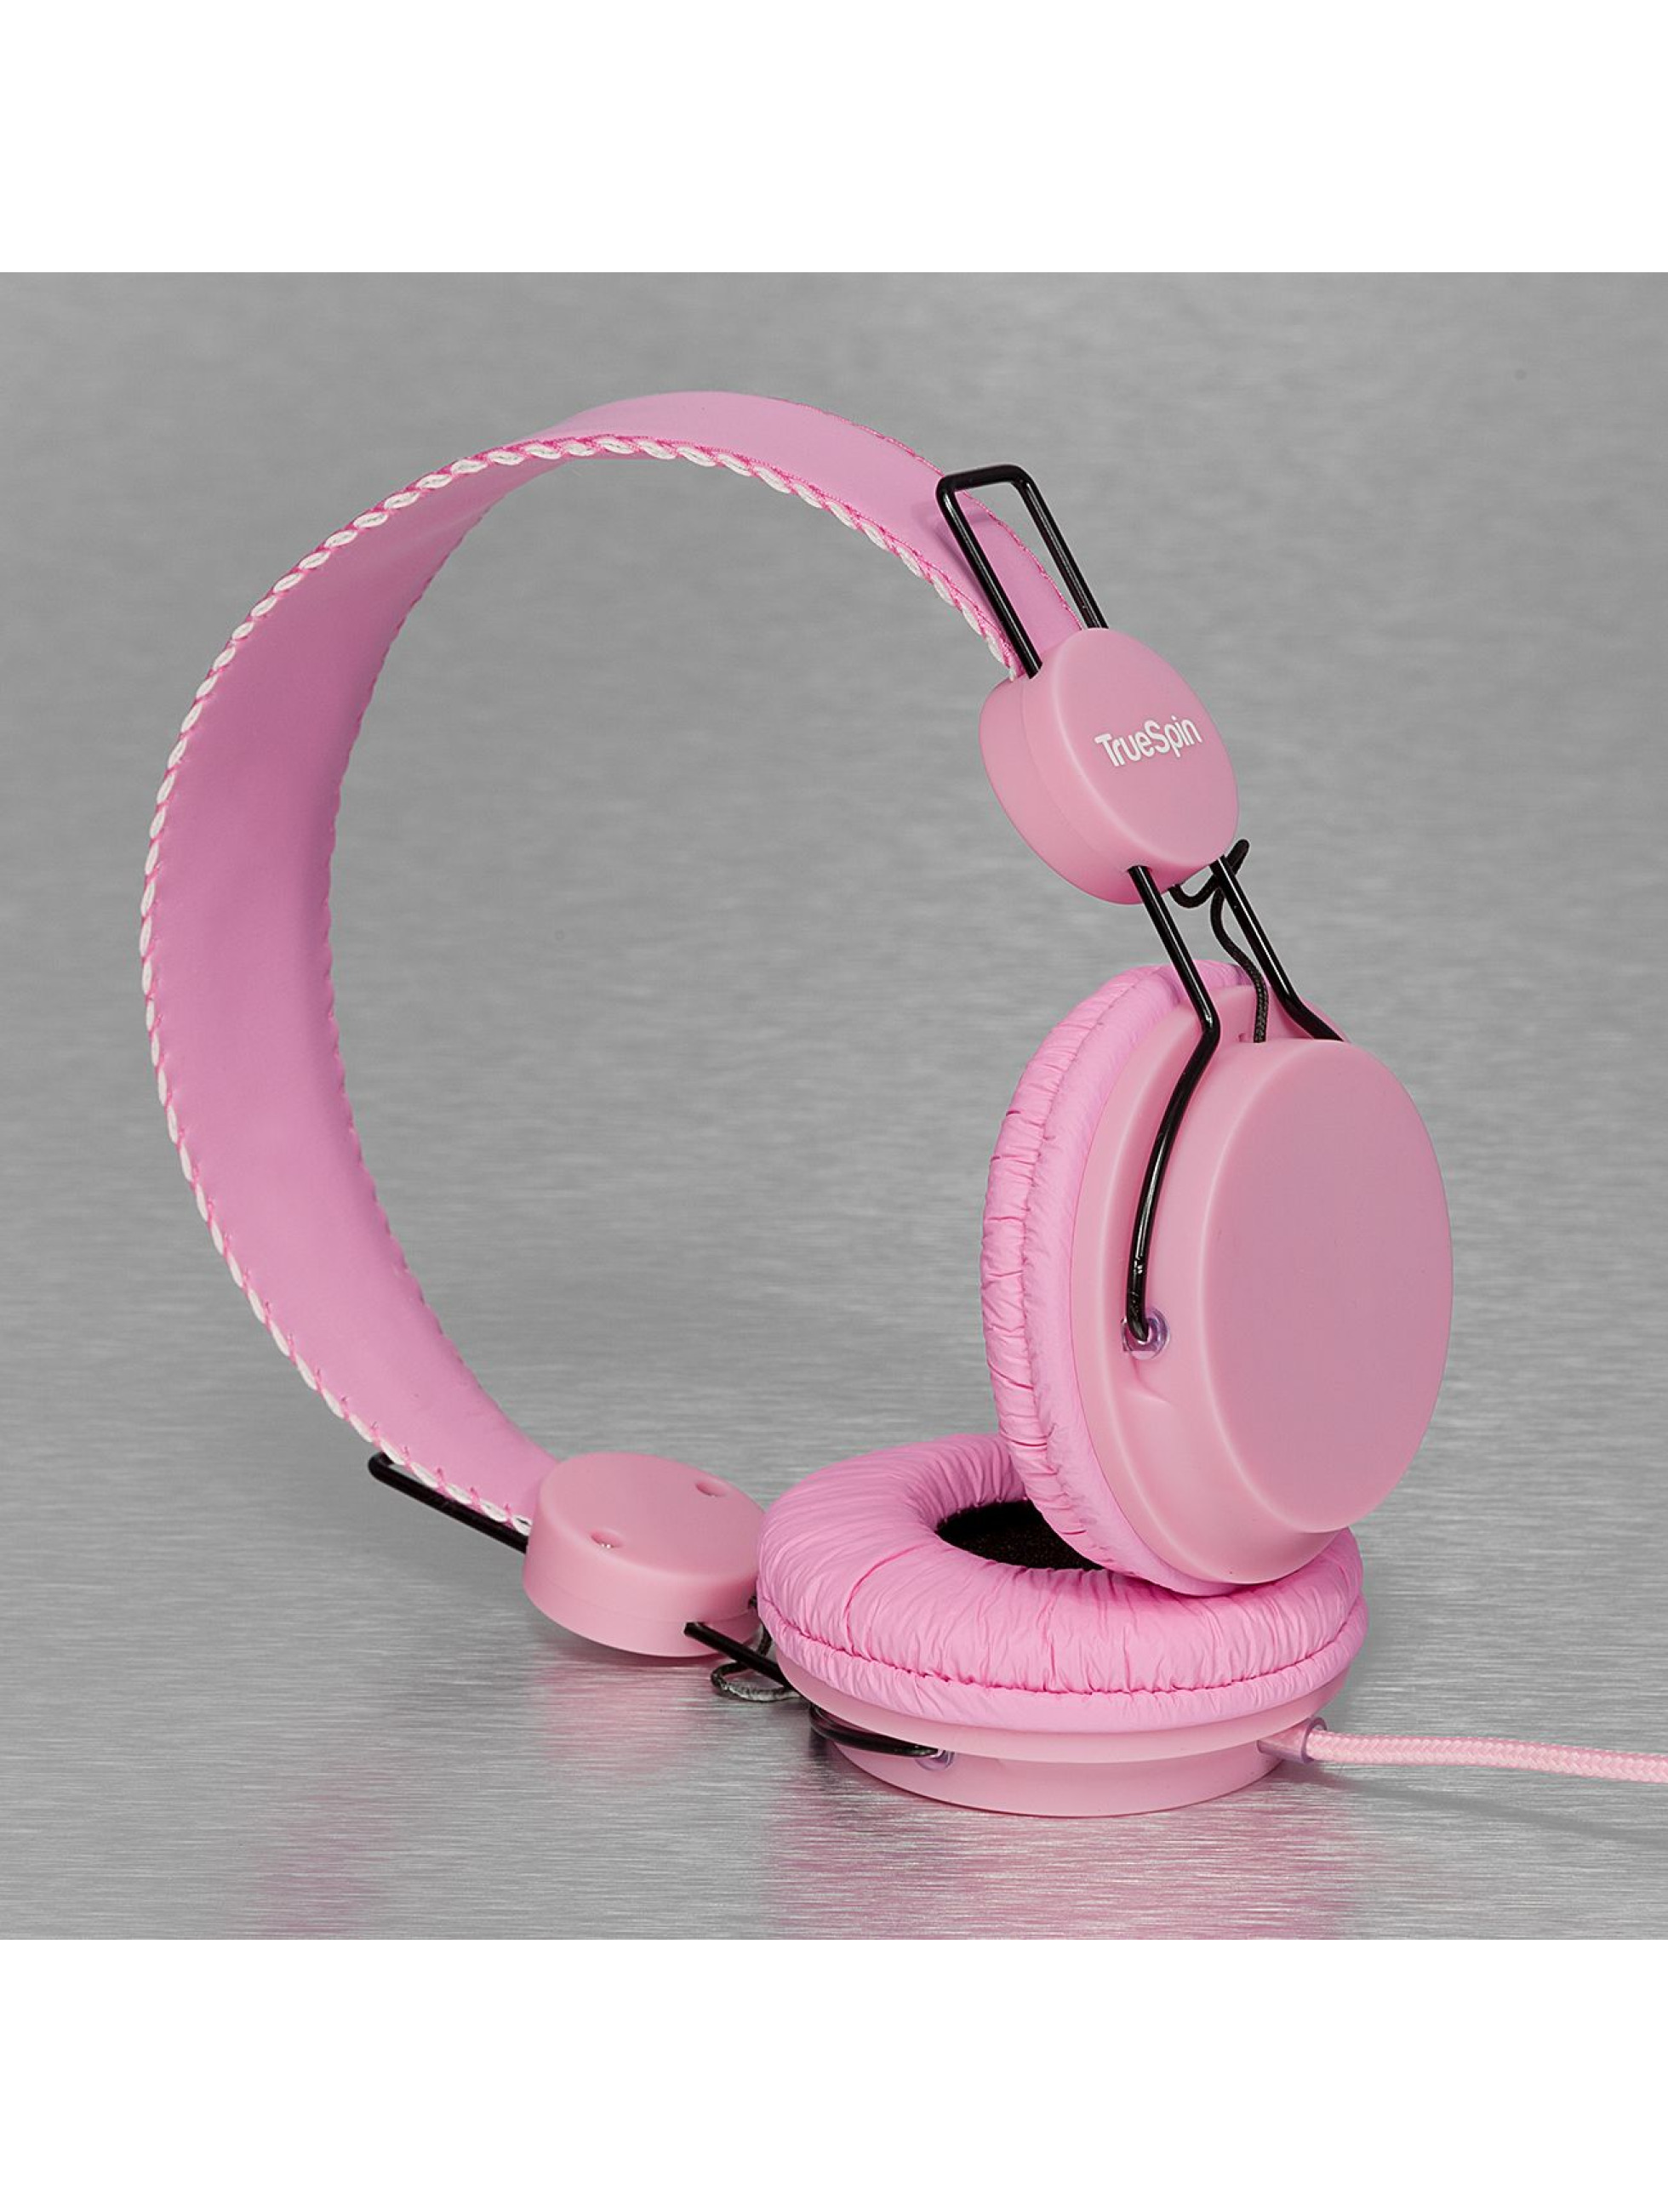 Kopfhörer Plain in pink